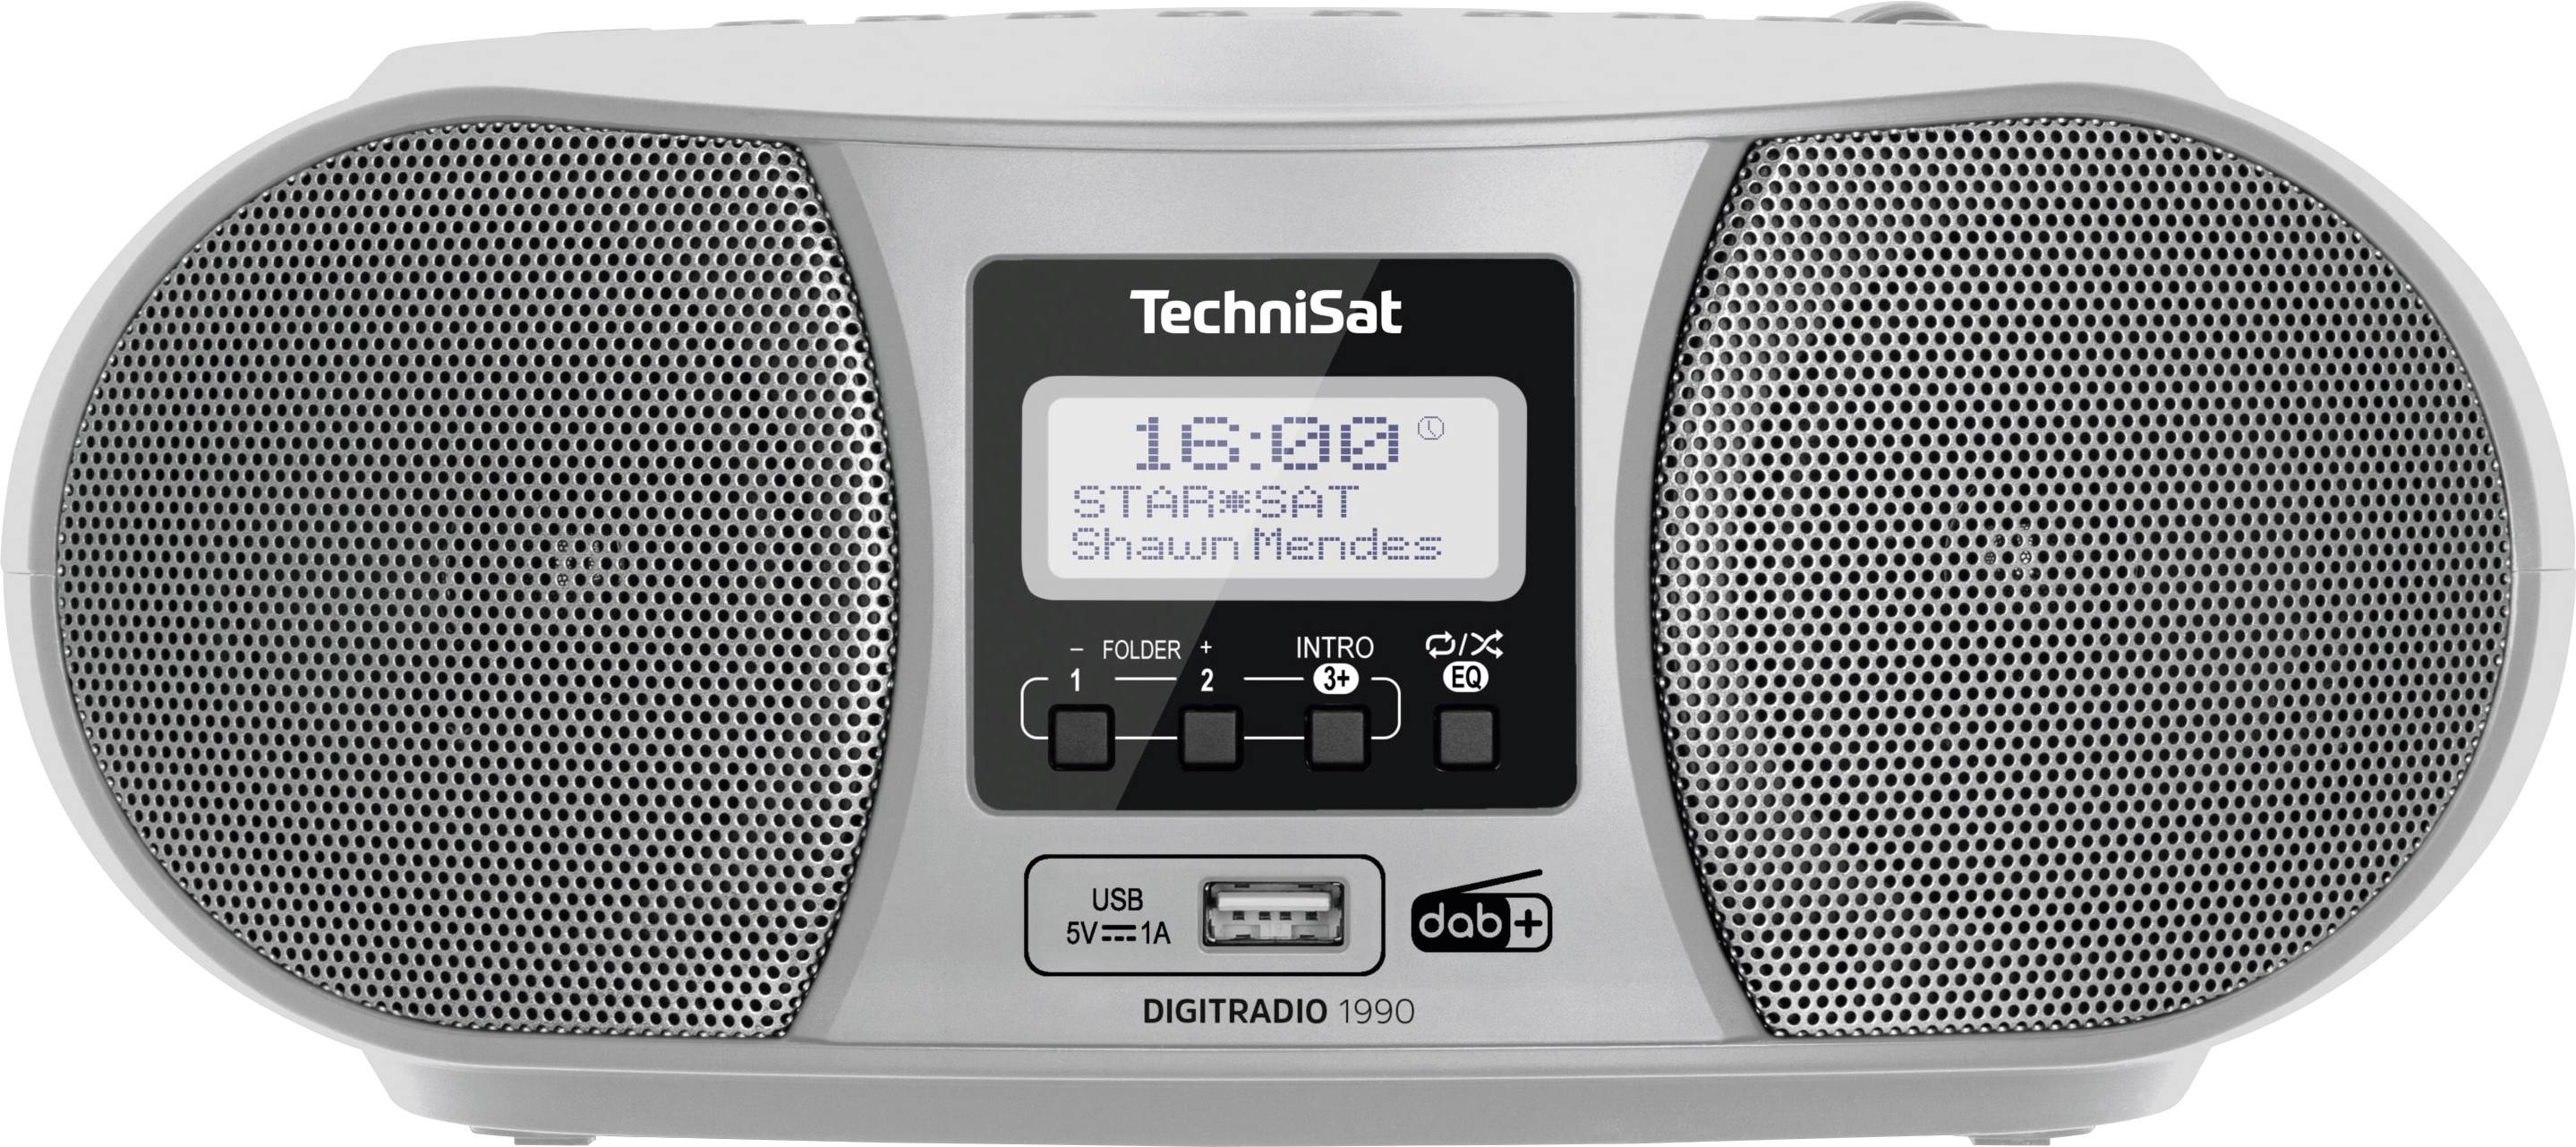 AUX, Electronic DIGITRADIO Alarm FM Buy charger, DAB+, TechniSat Bluetooth, CD, CD Conrad Silver Battery USB 1990 Radio | clock player